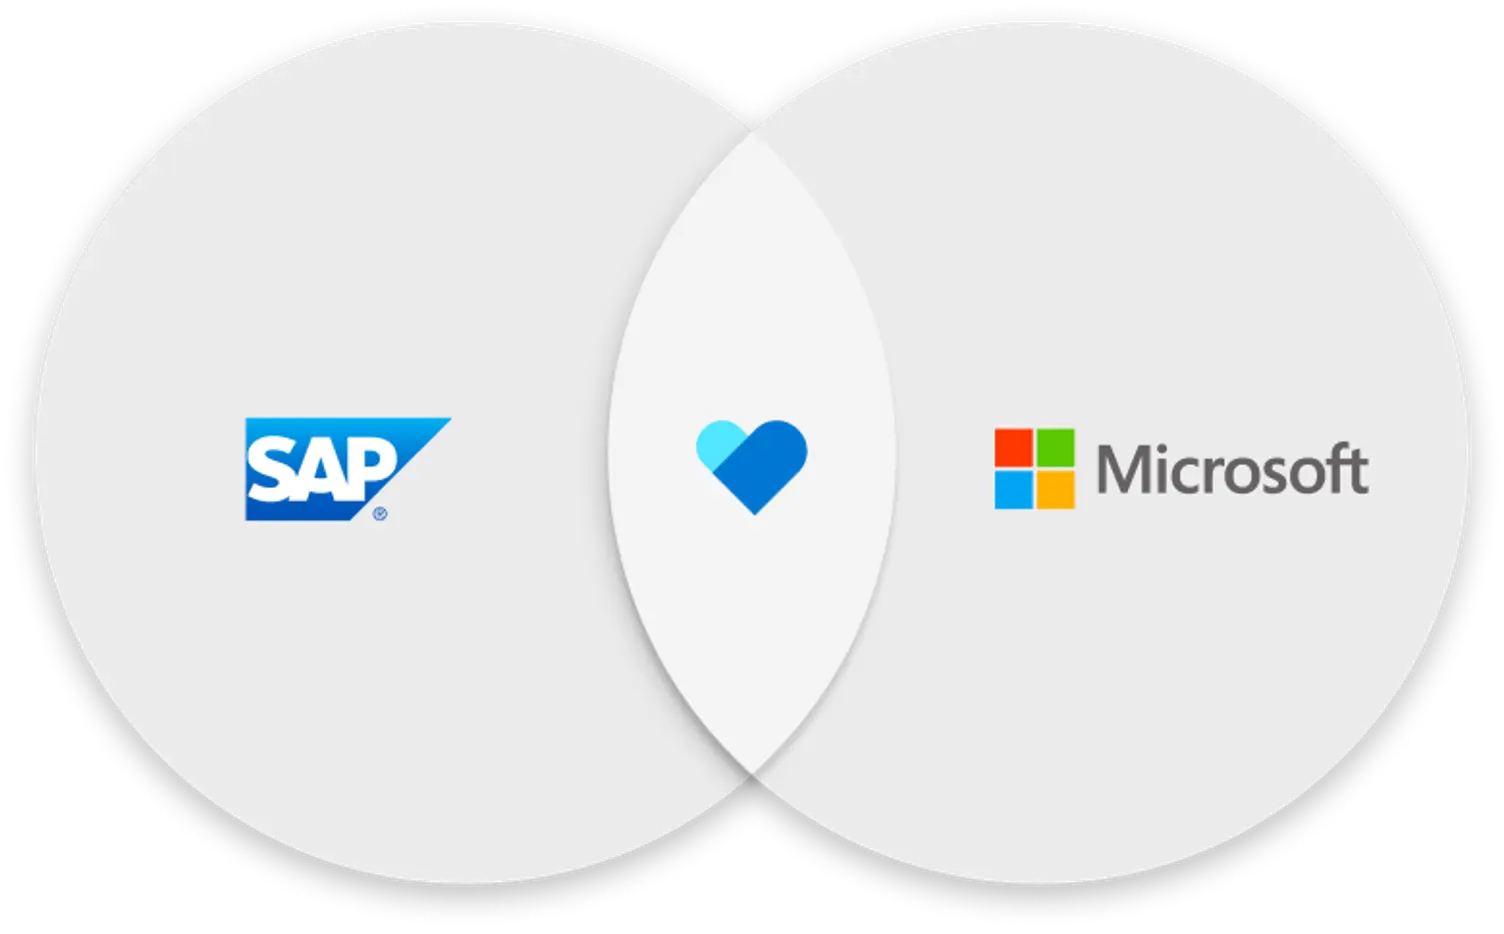 SAP Hearts Microsoft